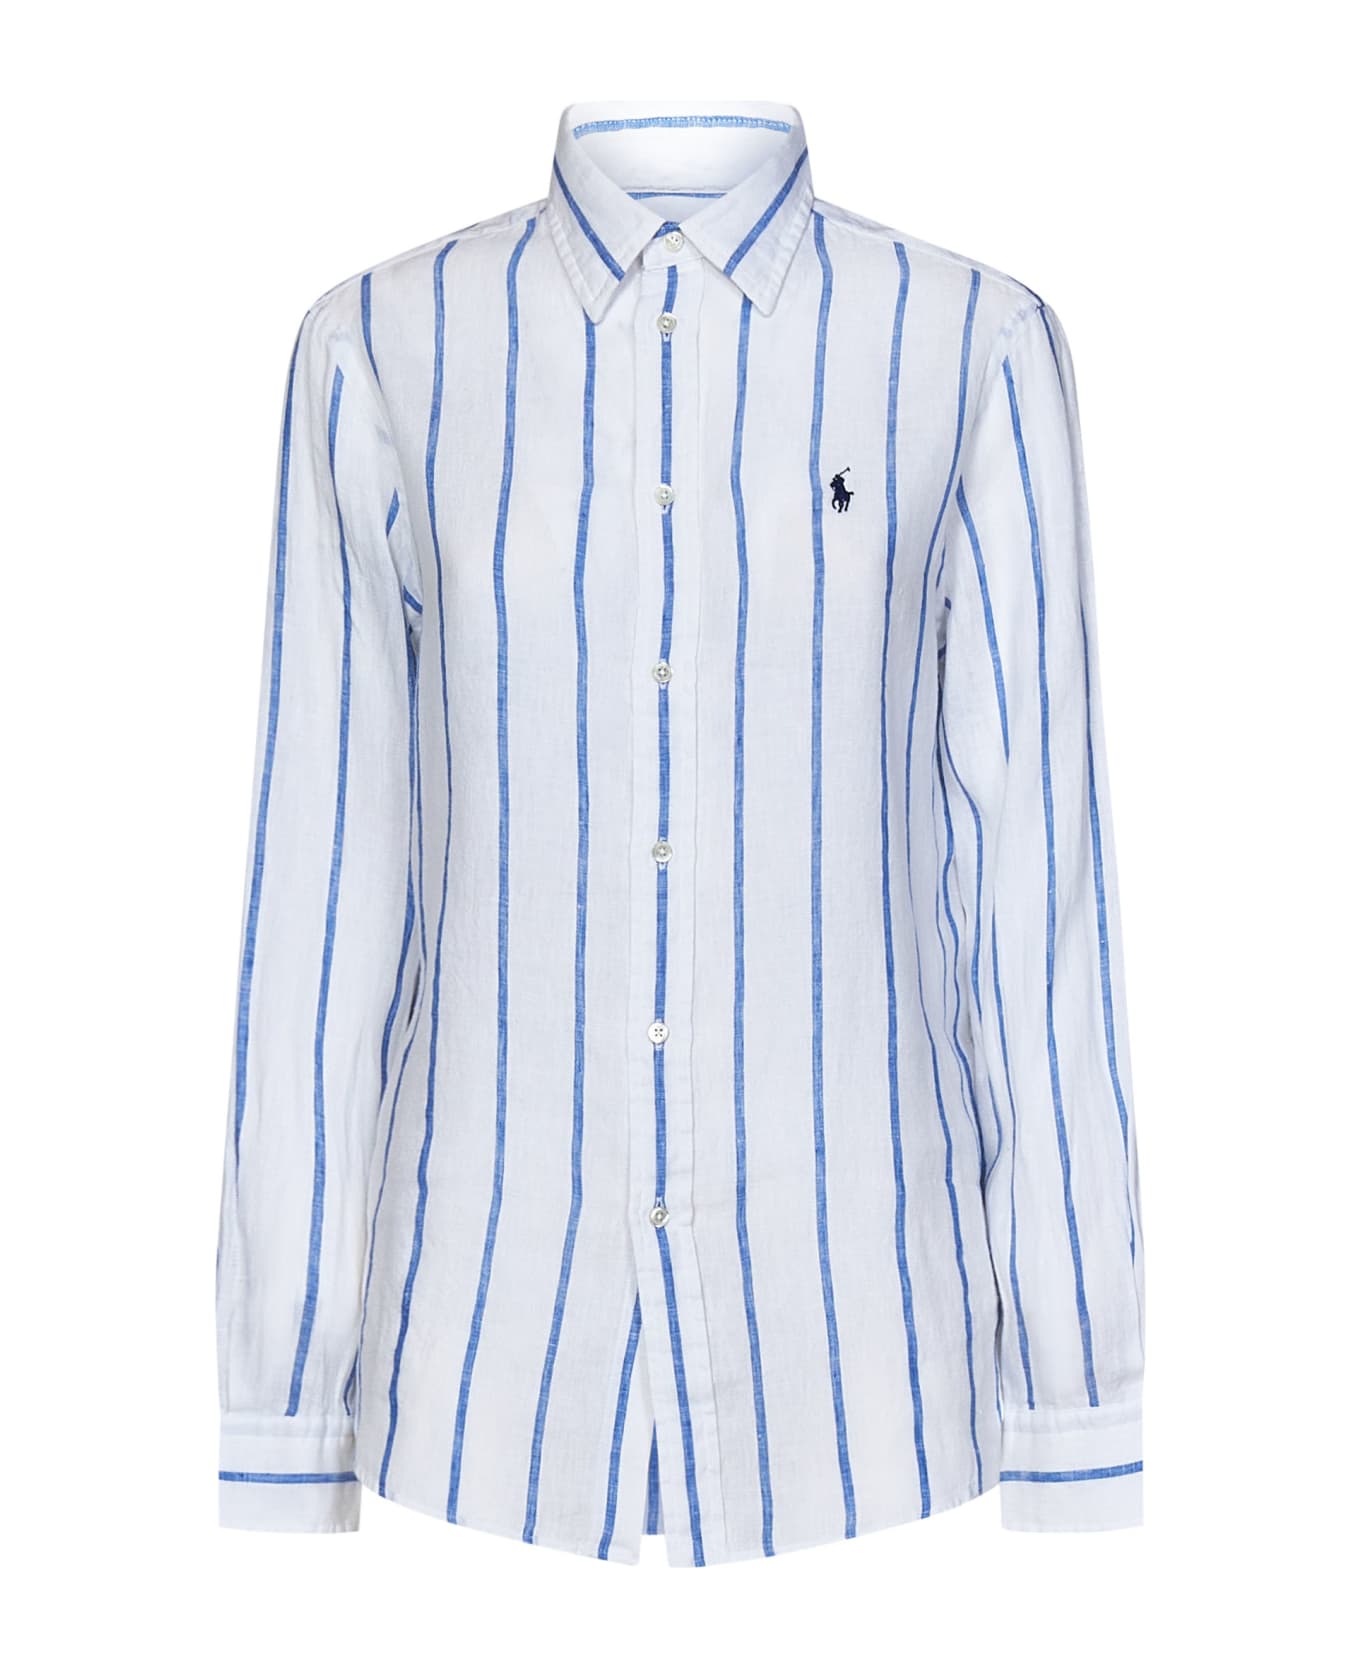 Ralph Lauren Shirt - White Royal シャツ